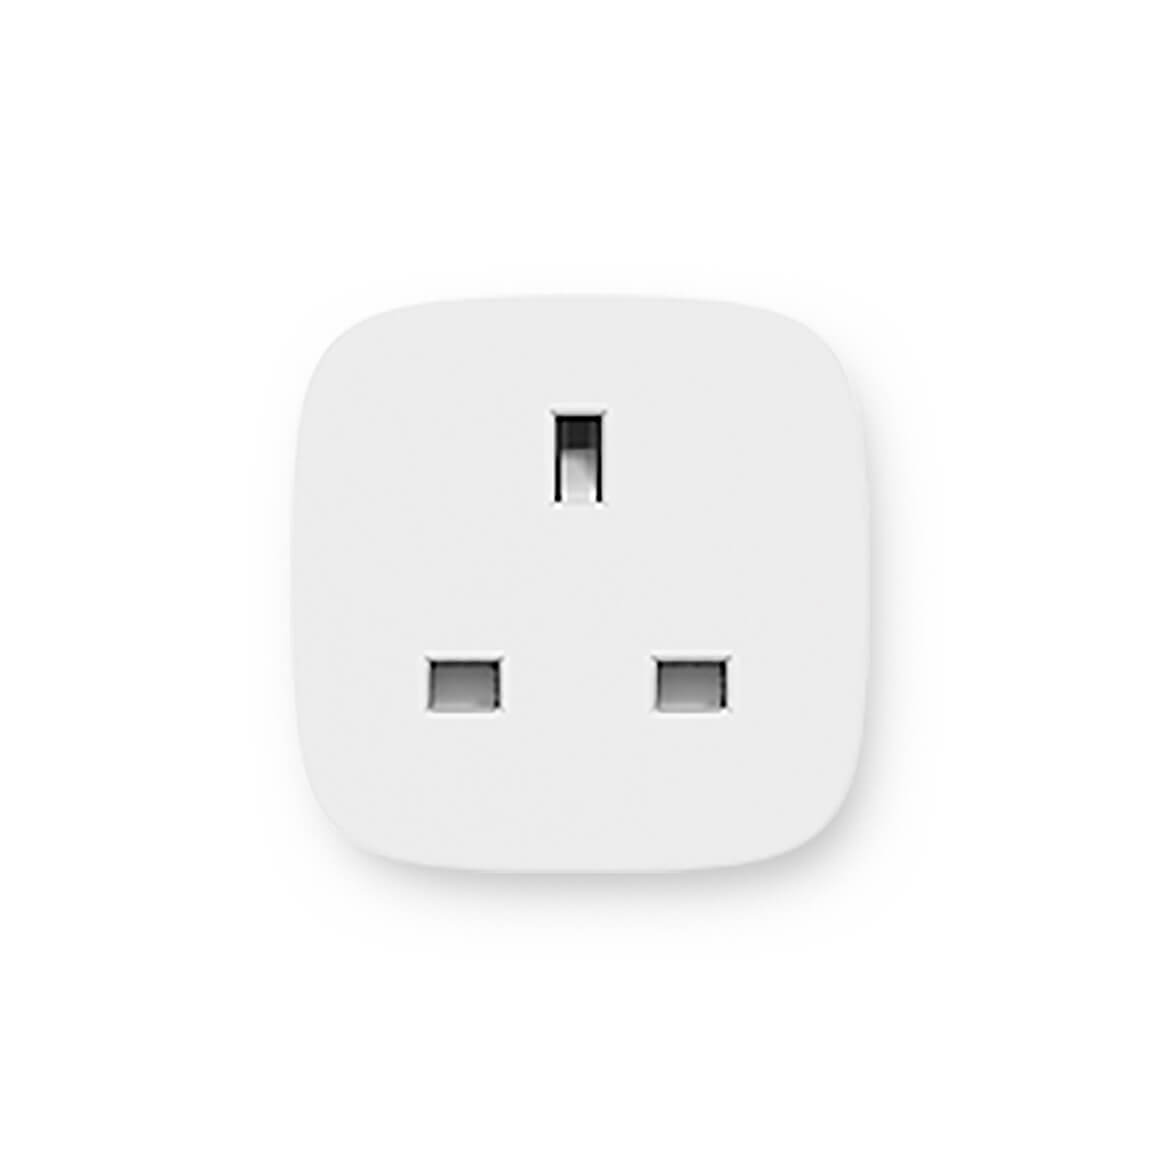  Smart Plug/UK/13A